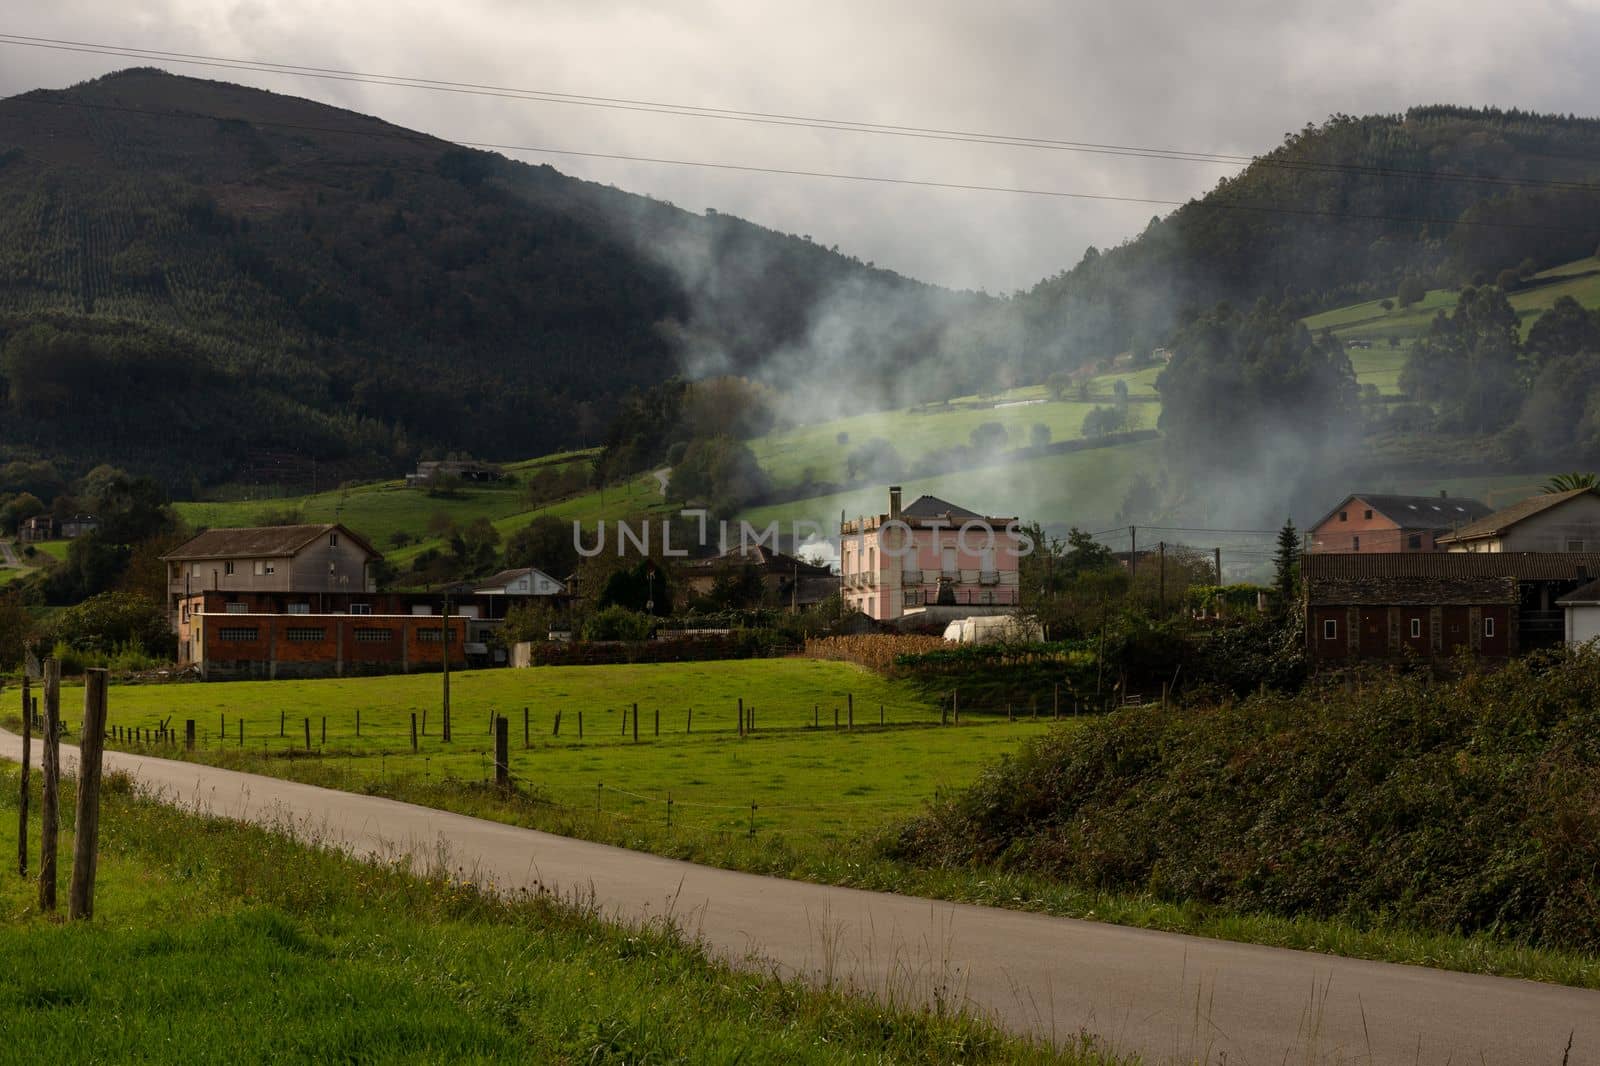 Rural landscape of Lugo, Galicia by scasal15